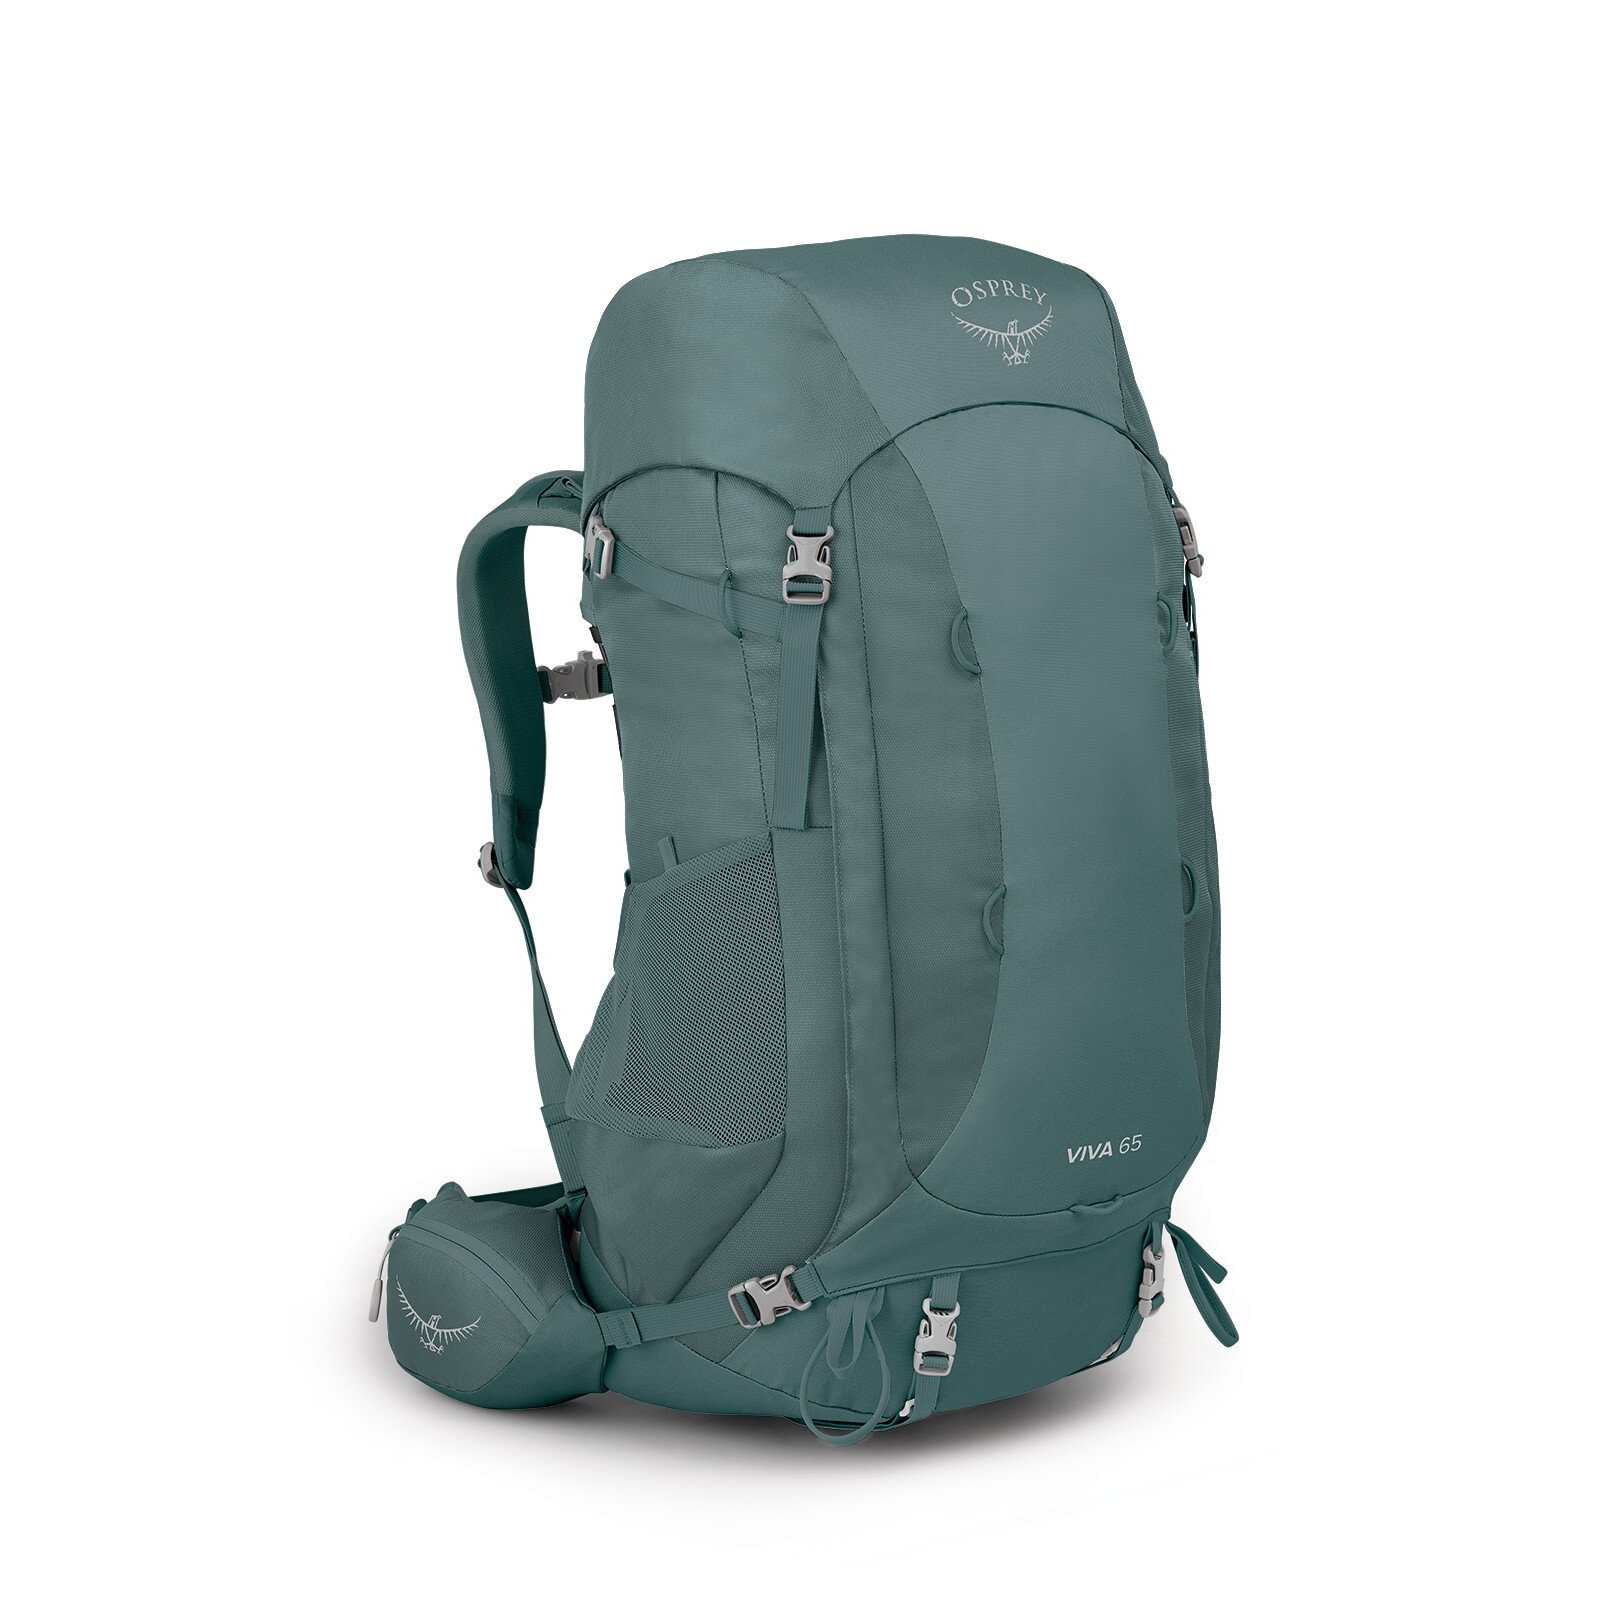 Backpacks - Packs - Camp & Hike | Breathe Outdoors